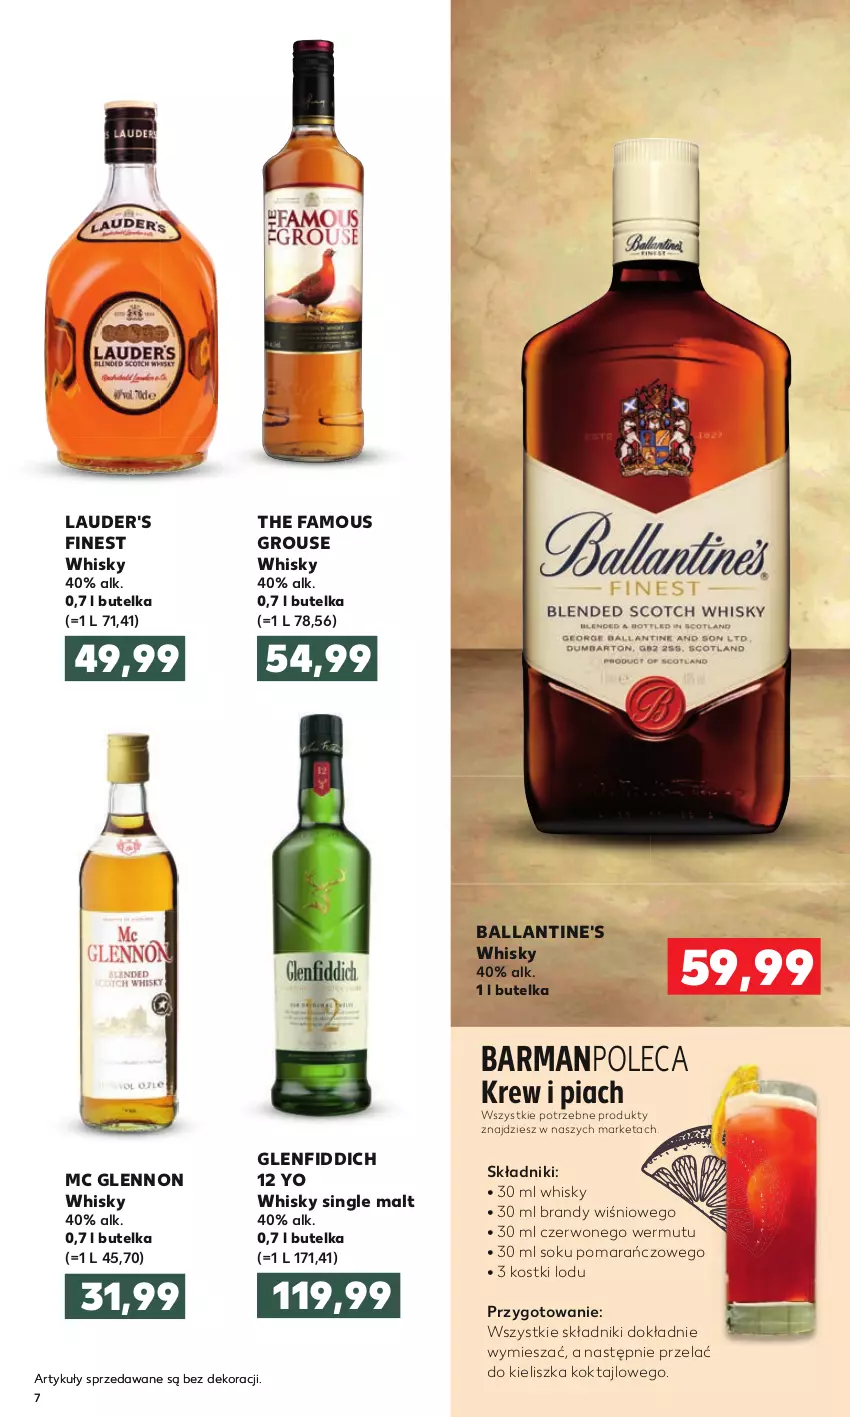 Gazetka promocyjna Kaufland - Barek - ważna 31.03 do 14.04.2021 - strona 7 - produkty: Ballantine's, Brandy, Fa, Lauder's, Sok, The Famous Grouse, Whisky